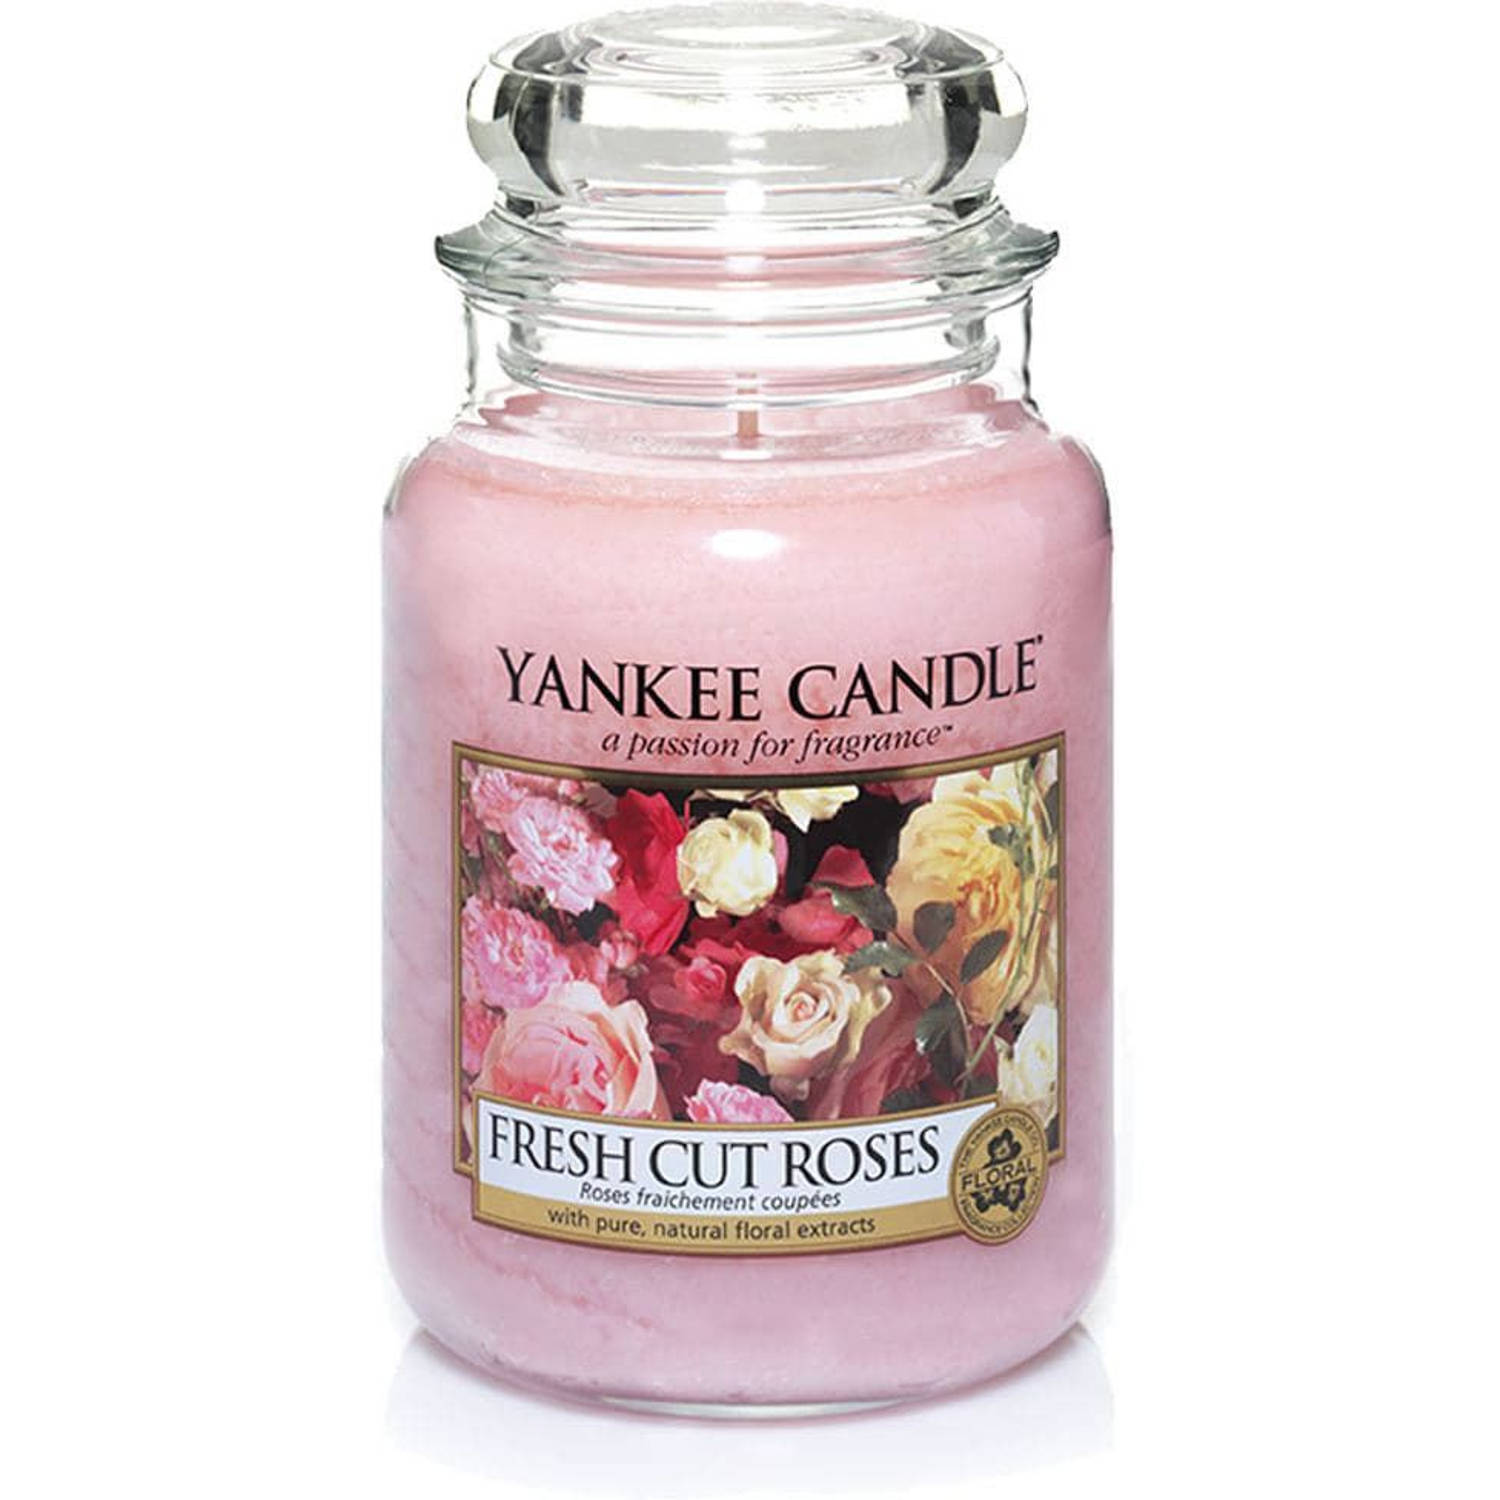 Yankee Candle - Fresh Cut Roses geurkaars - Large Jar - Tot 150 branduren